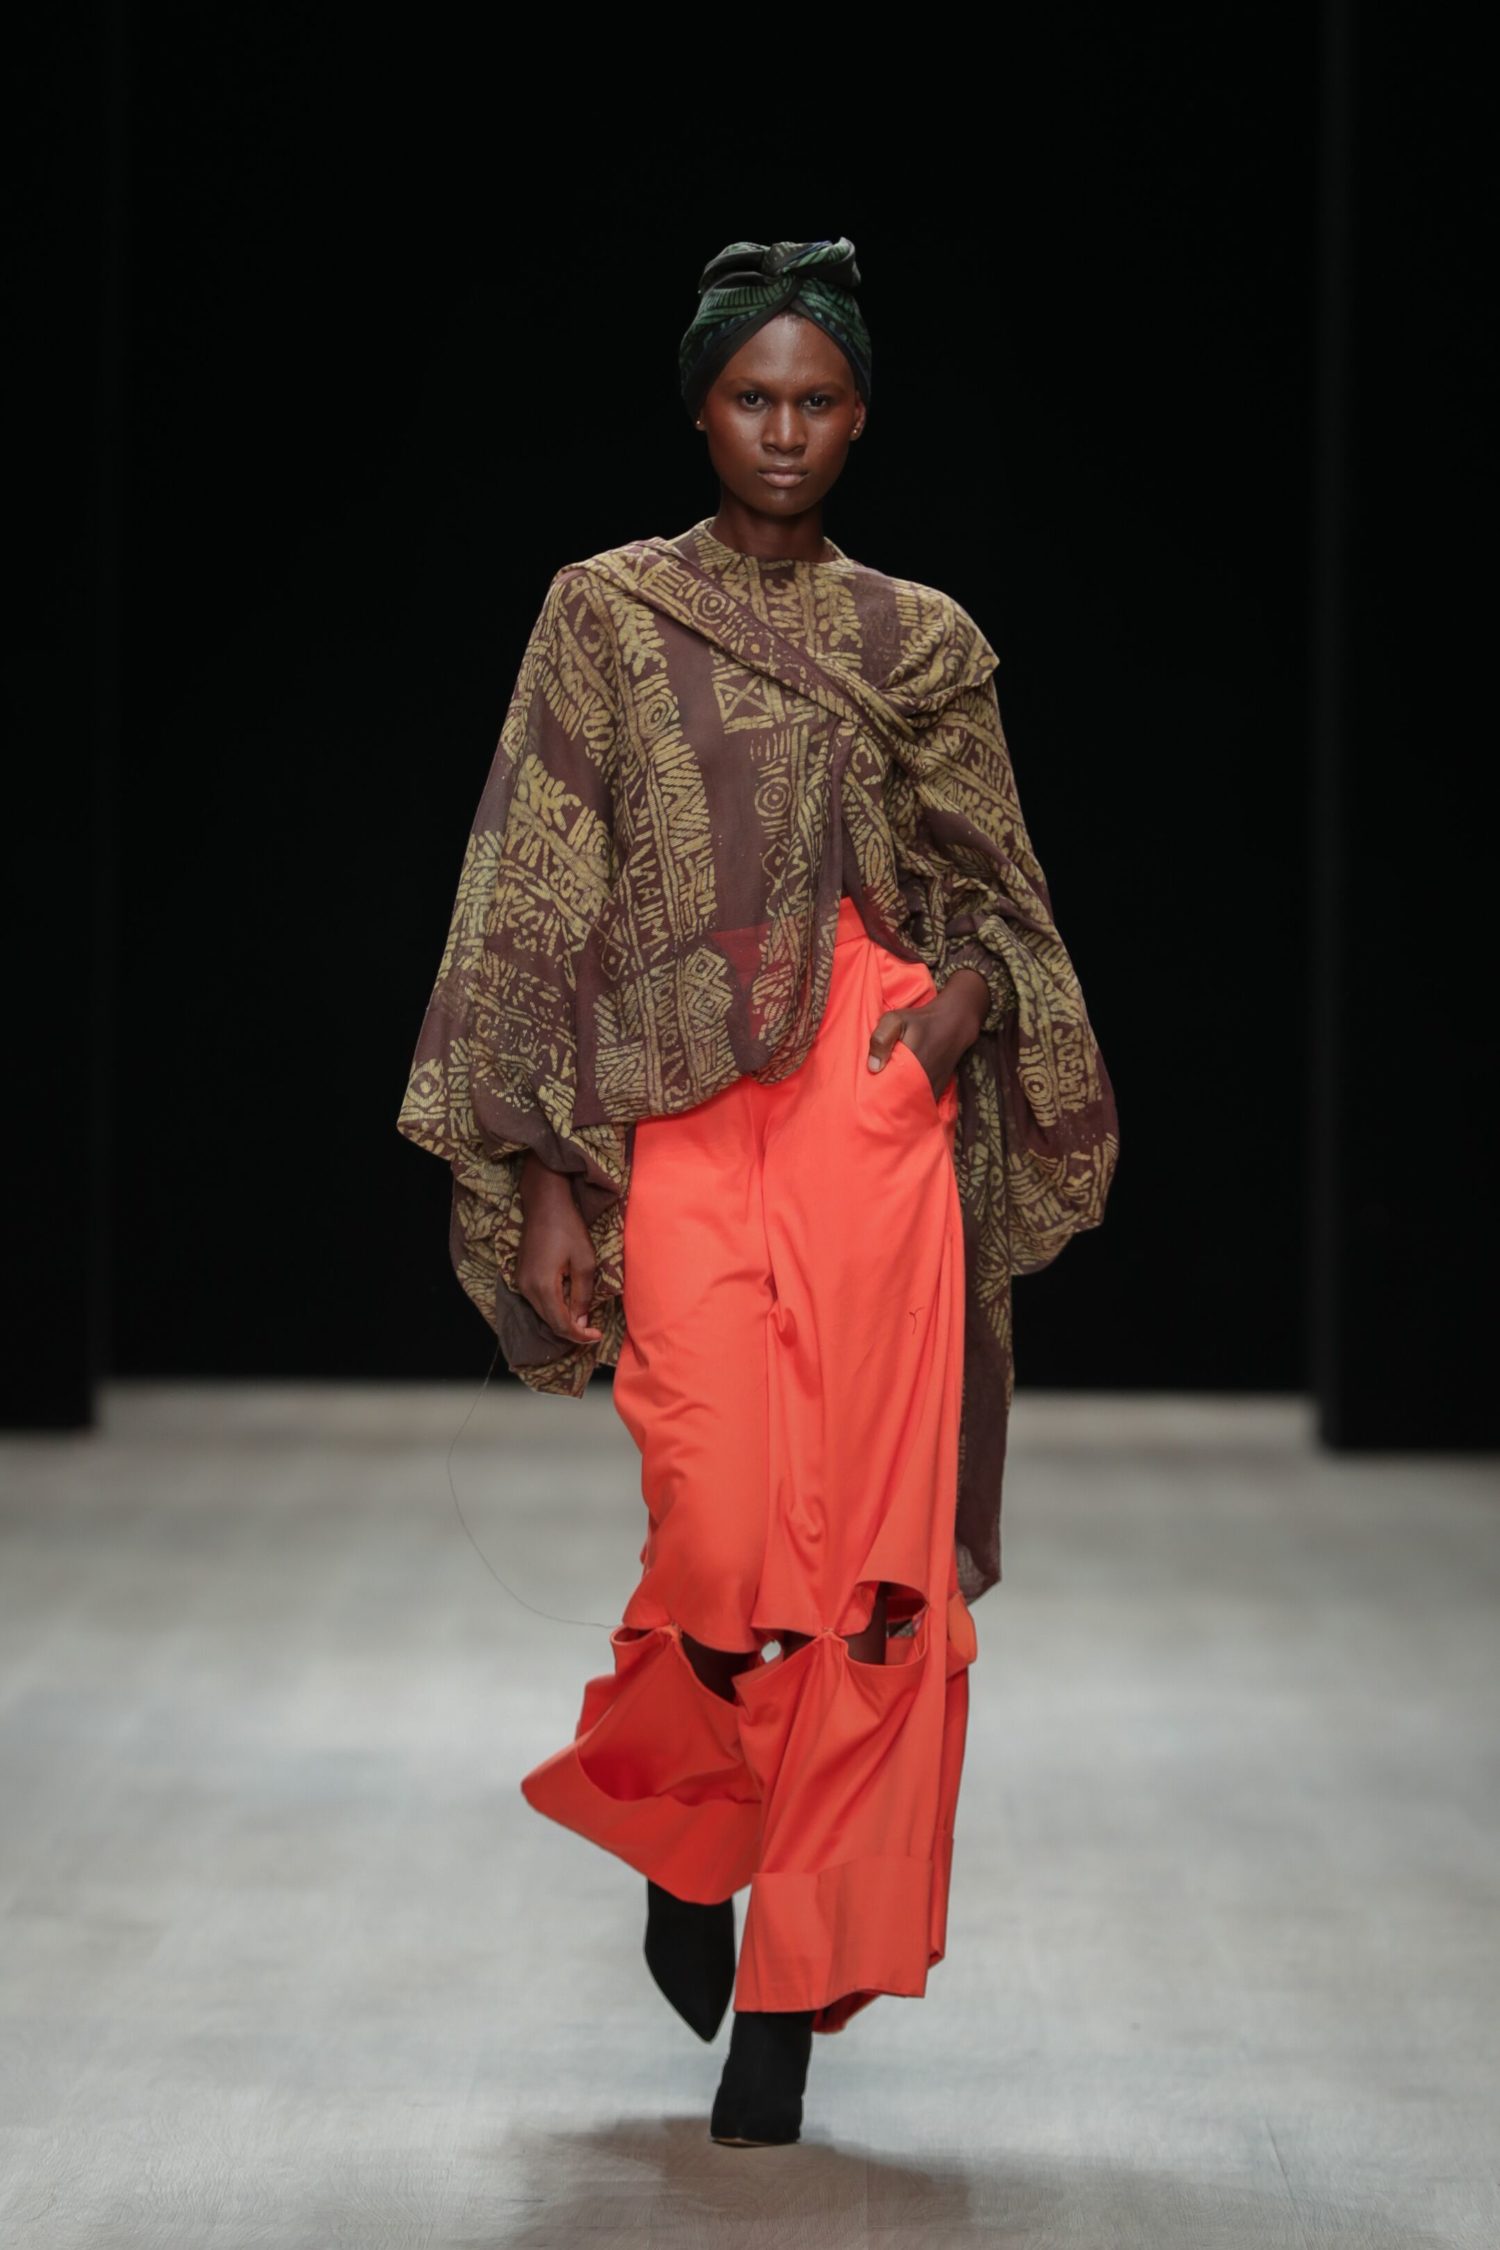 ARISE Fashion Week 2019 | Odio Mimonet